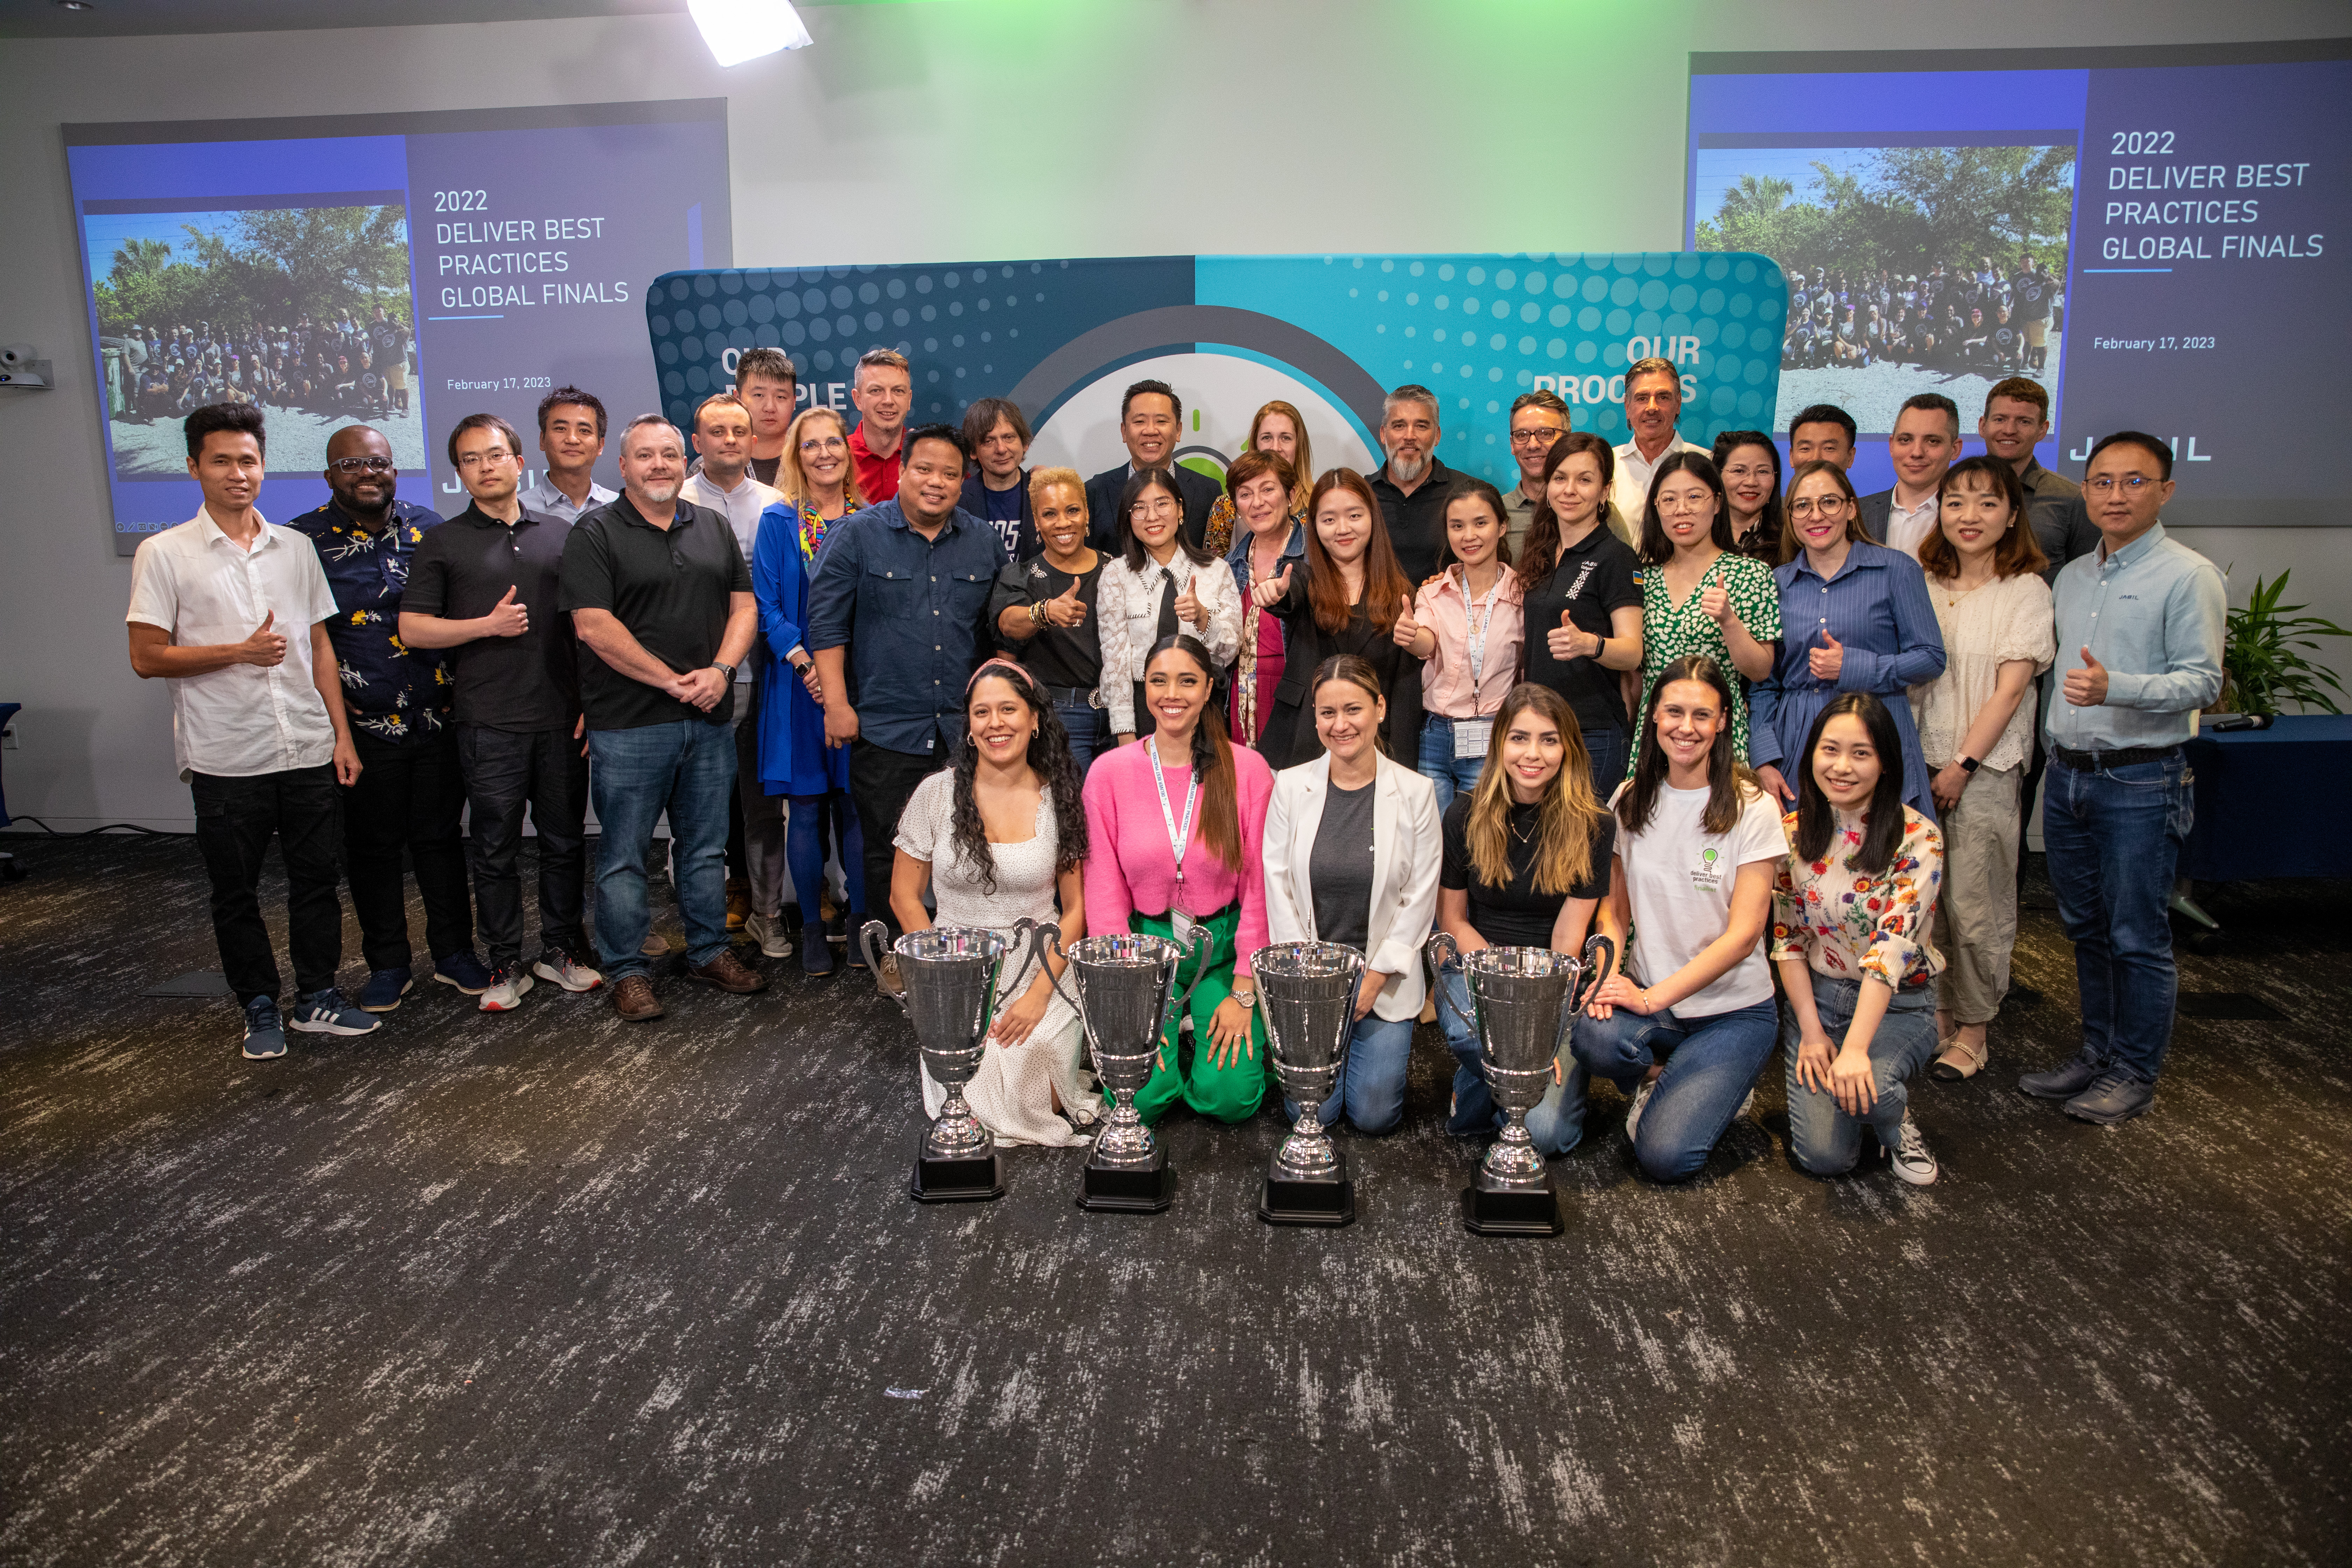 Group photo of Deliver Best Practices global finalist participants. 